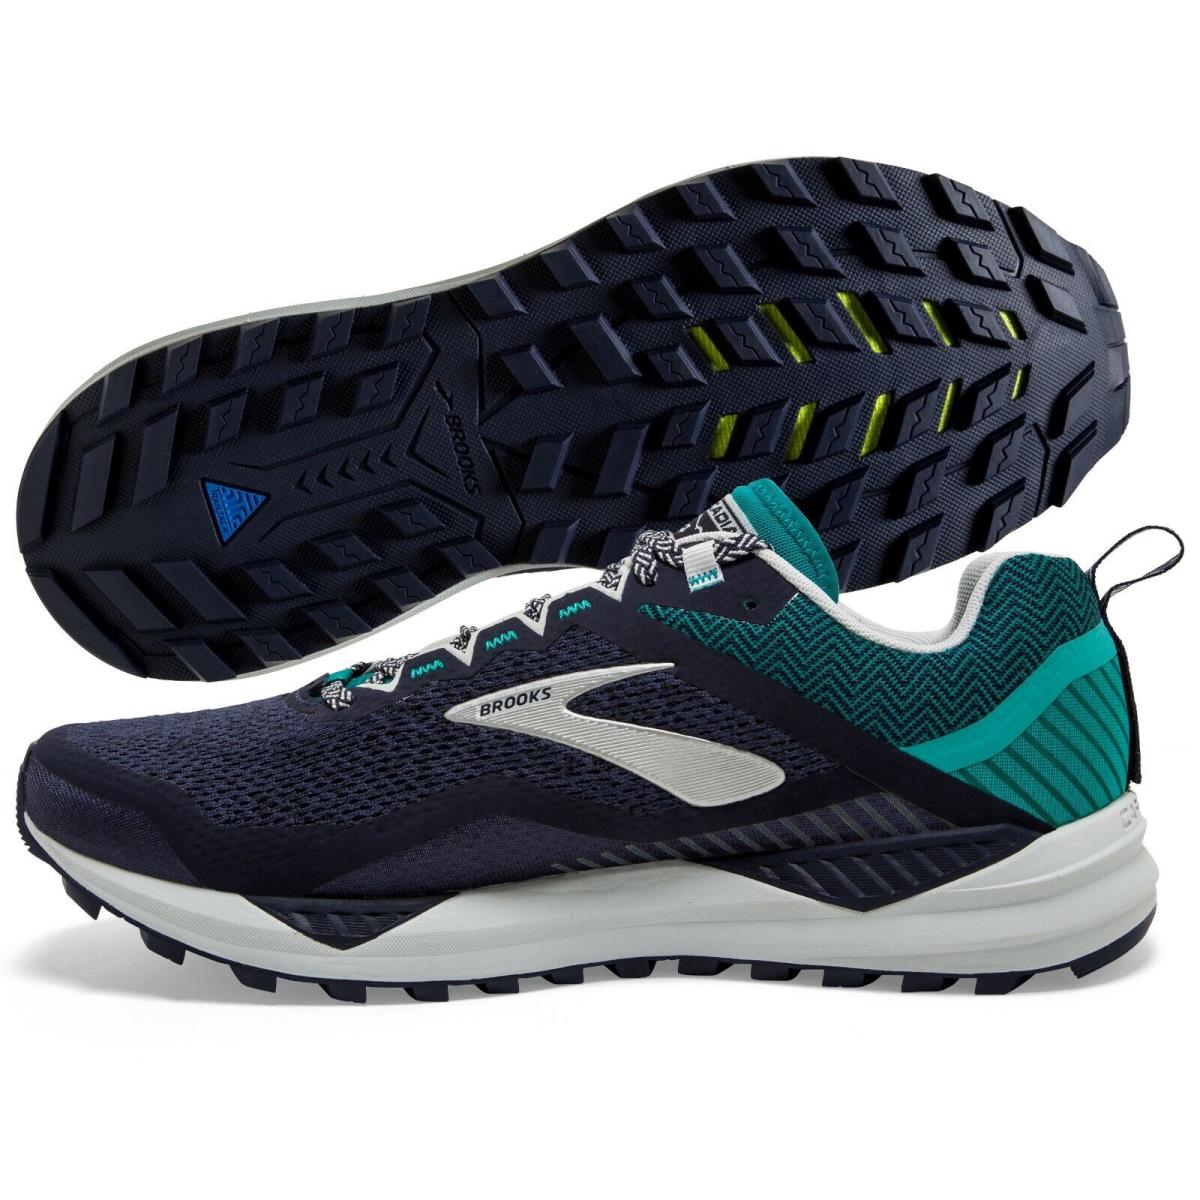 Brooks Cascadia 14 Running Shoes Navy/blue Grass/grey Mens Size 12 D M